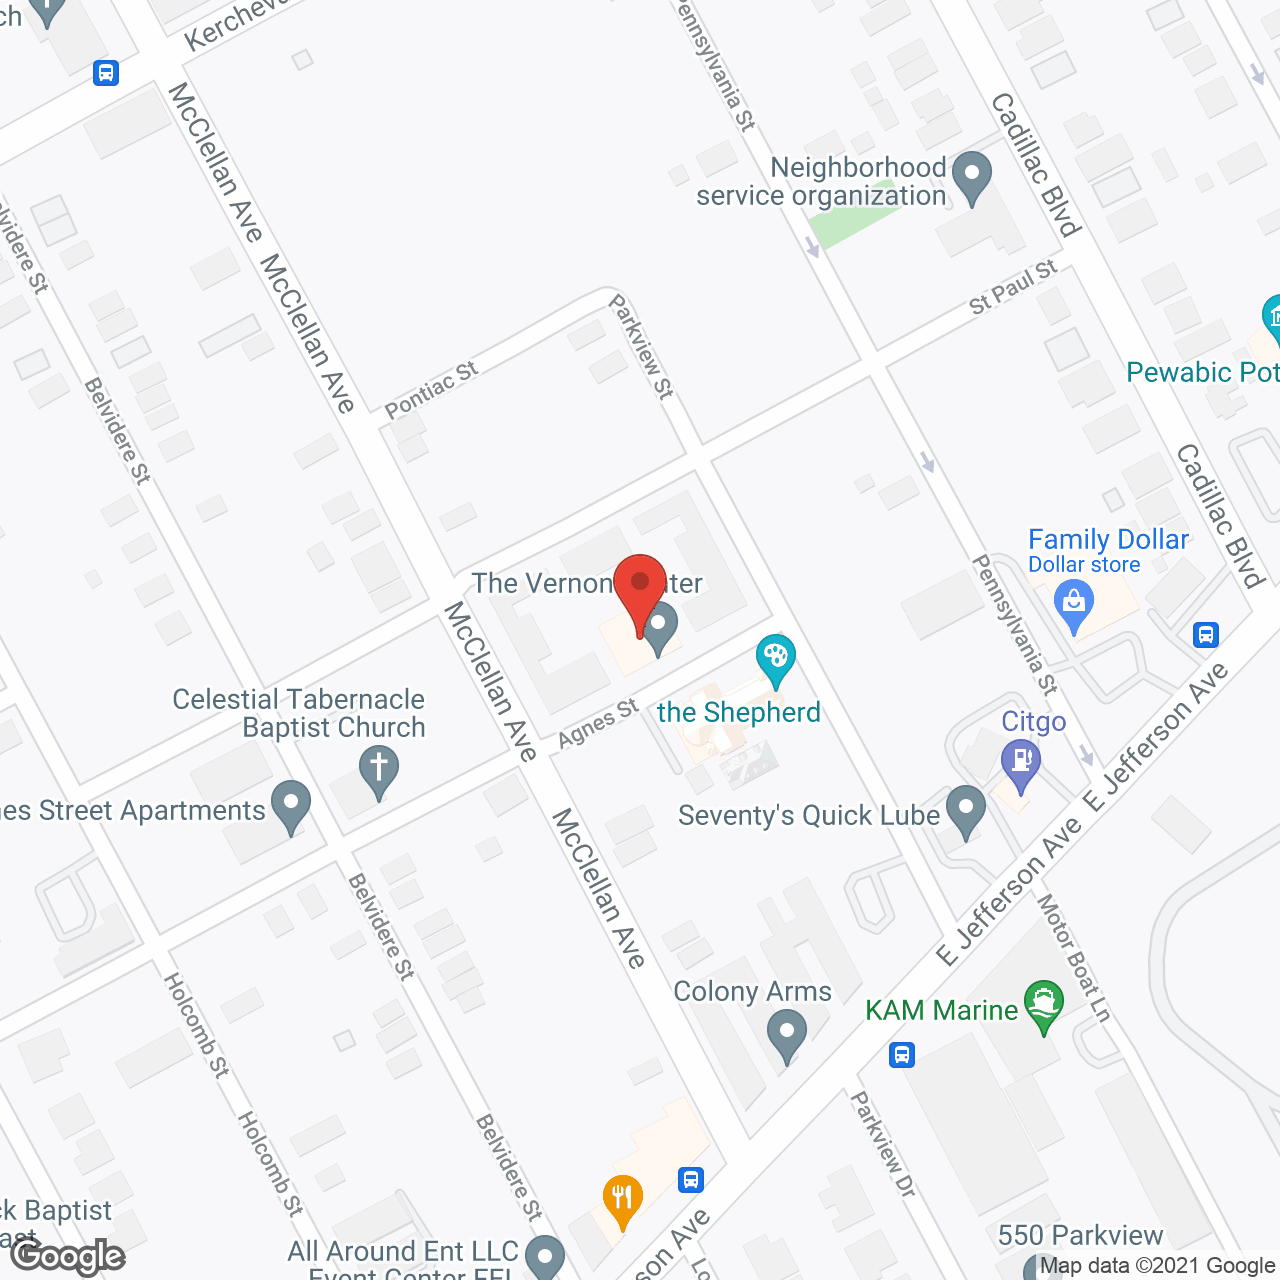 The Vernon Center in google map